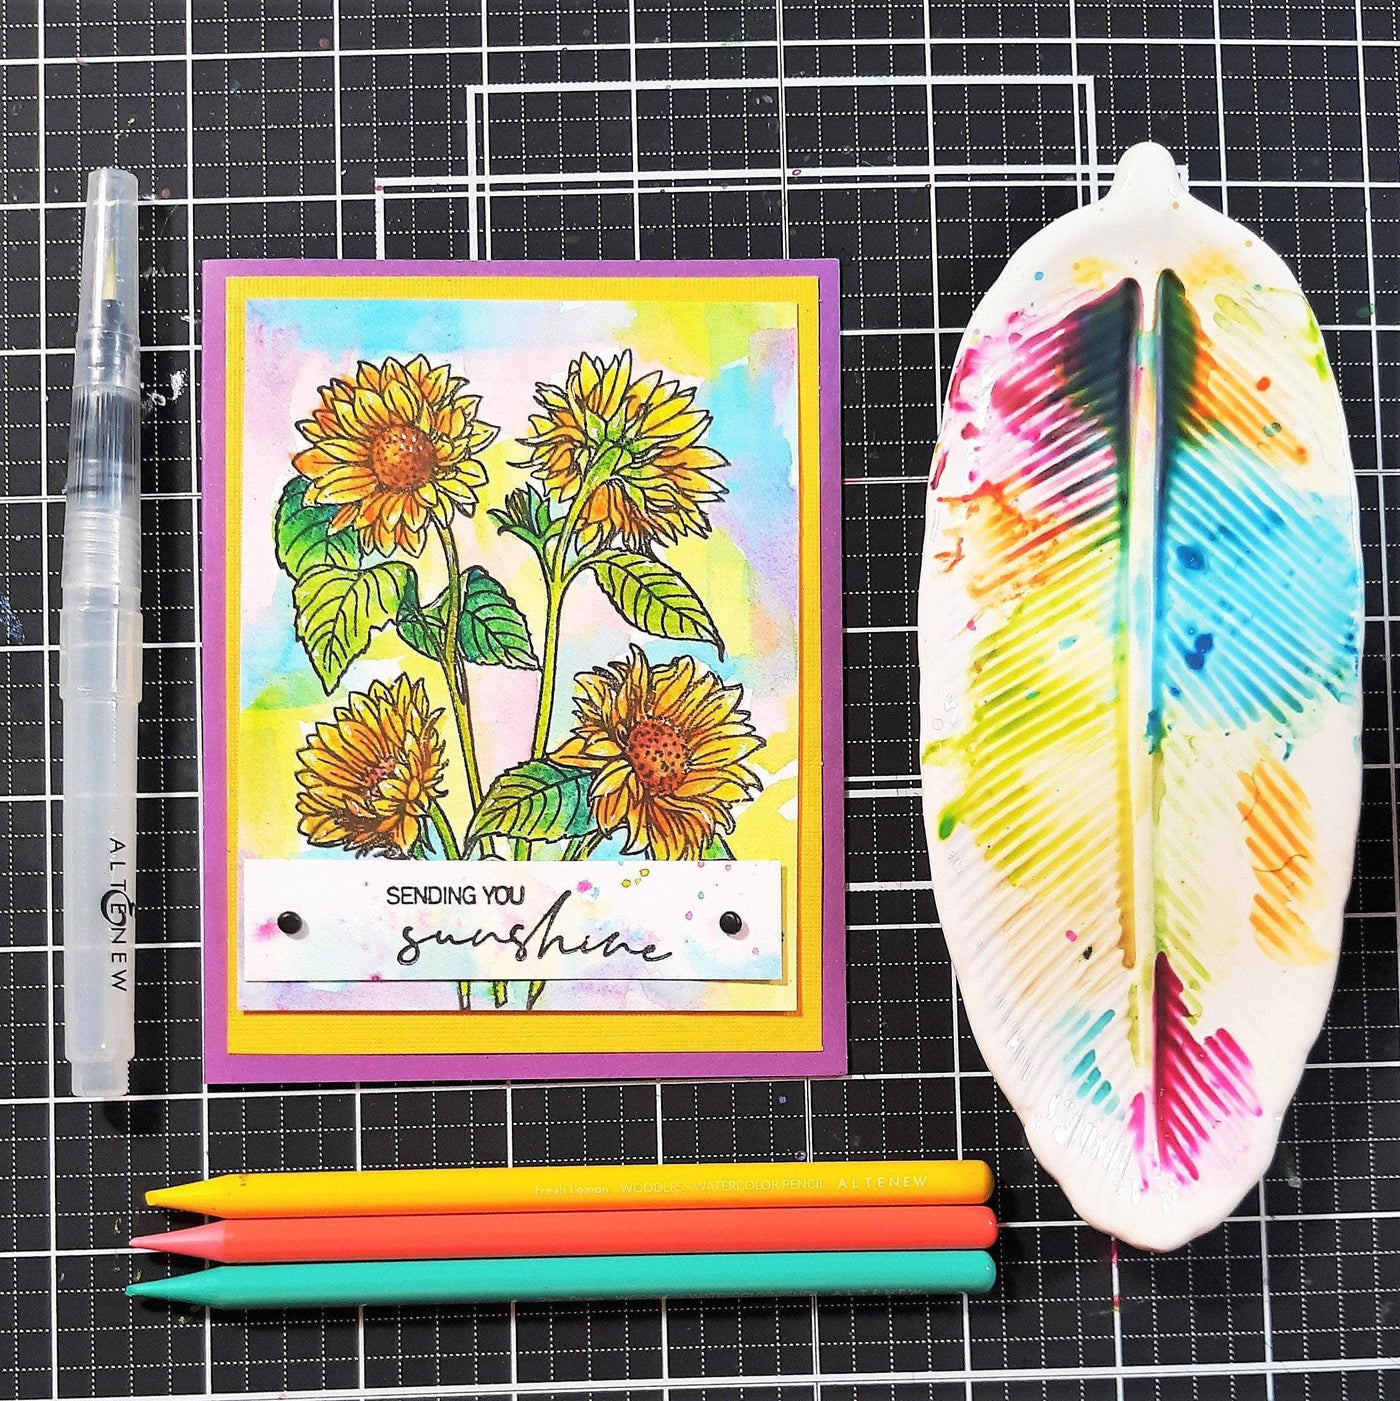 Altenew Watercolor Pencil & Brushes & Paper Set Woodless Watercolor Pencils Starter Bundle